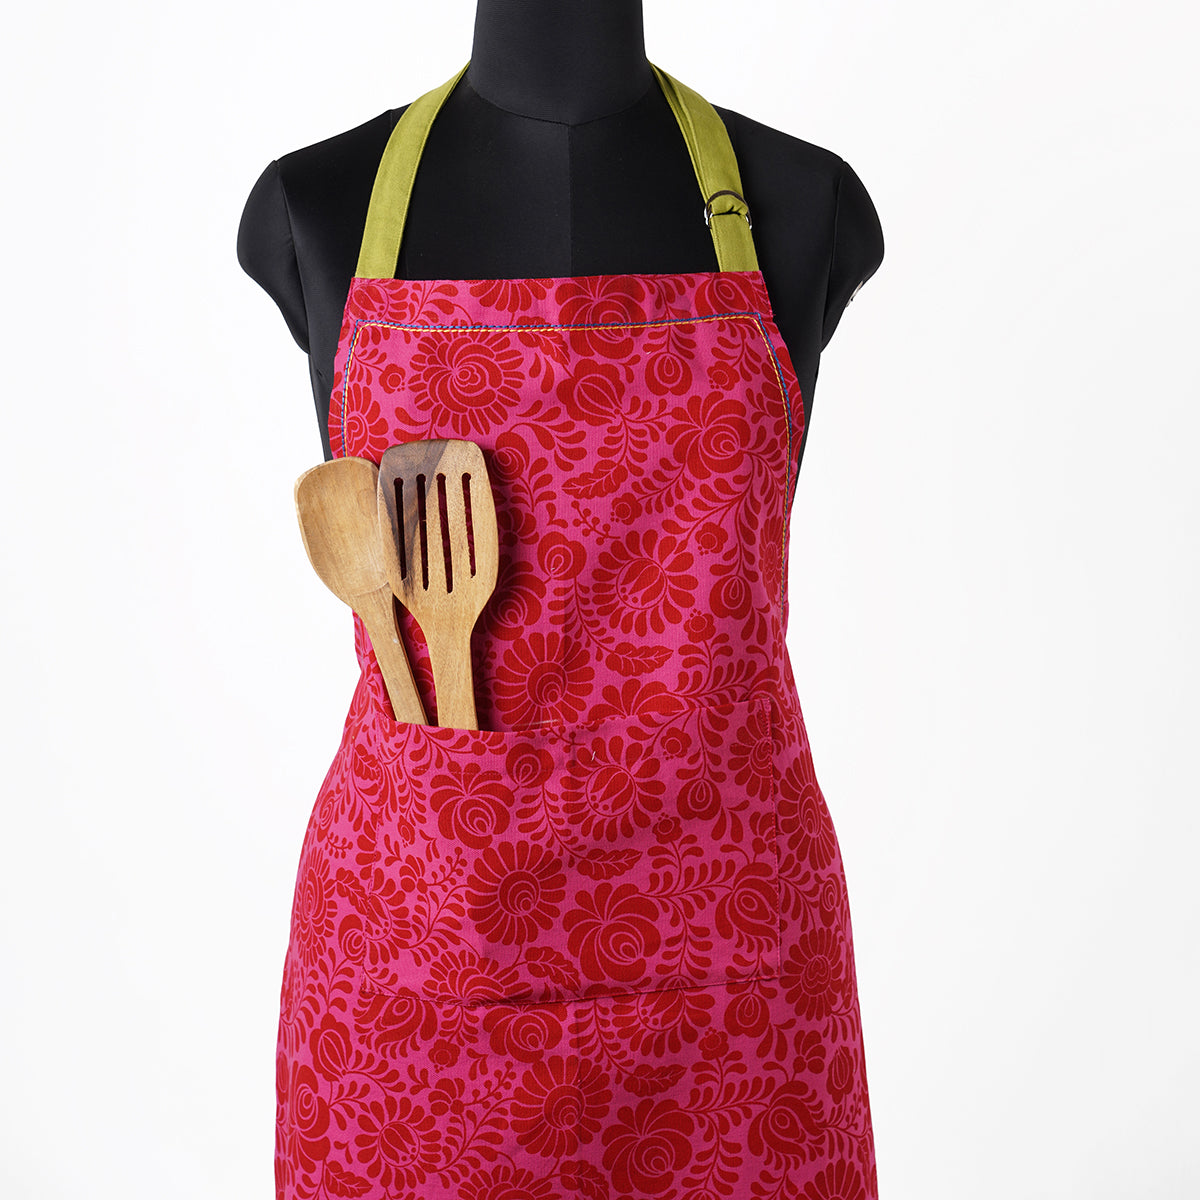 Matyo Hot pink color apron, floral print, kitchen accessory, 100% cotton, size 27"X 35"